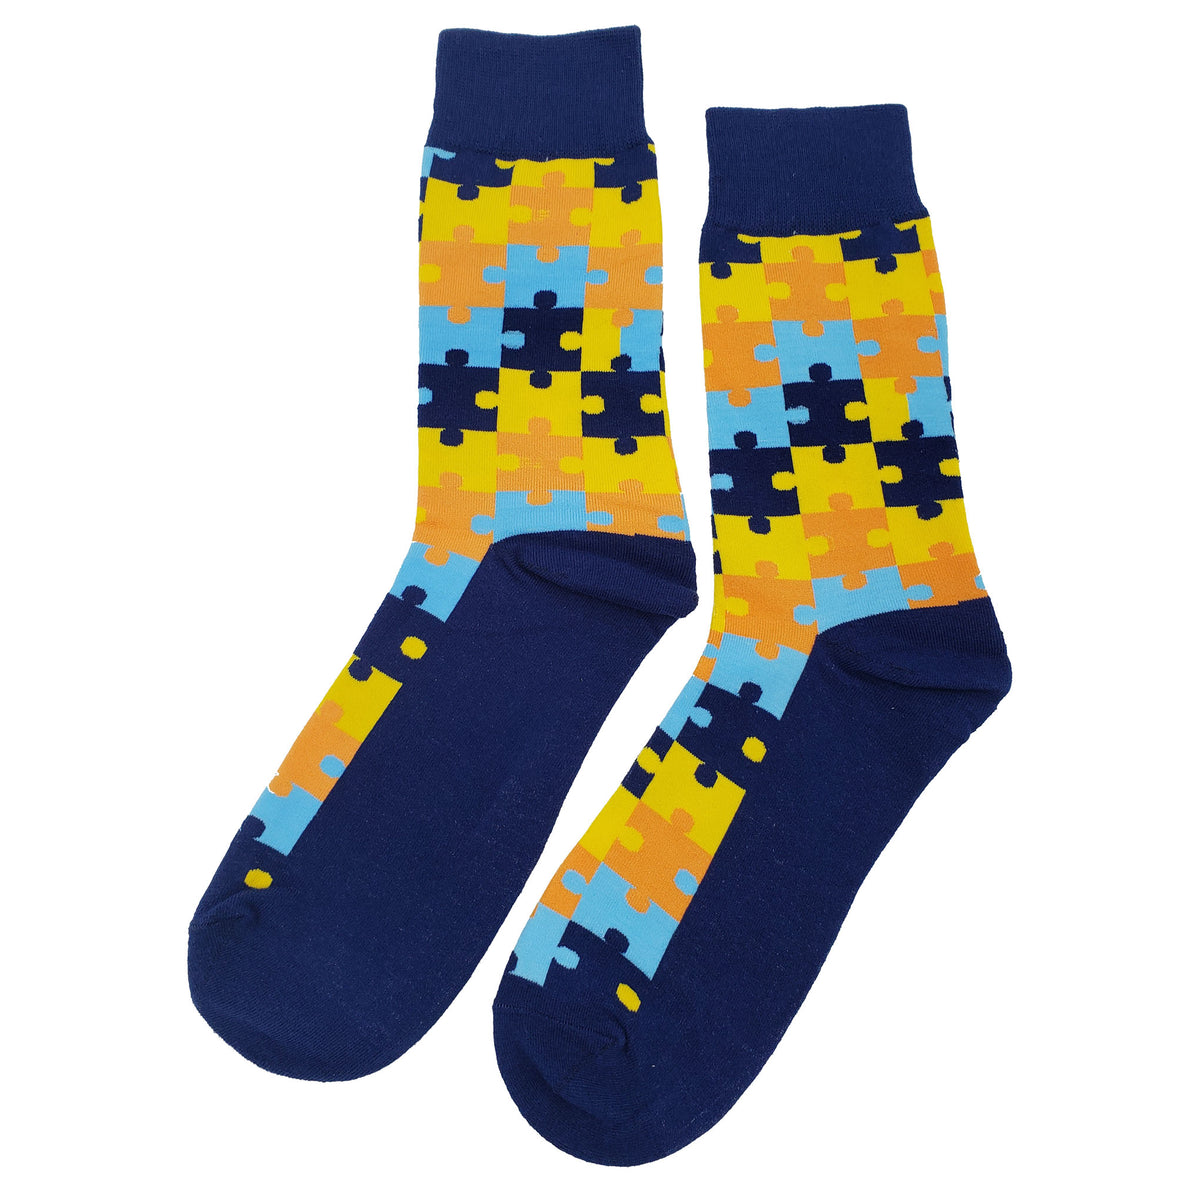 Puzzle Socks - Fun and Crazy Socks at Sockfly.com